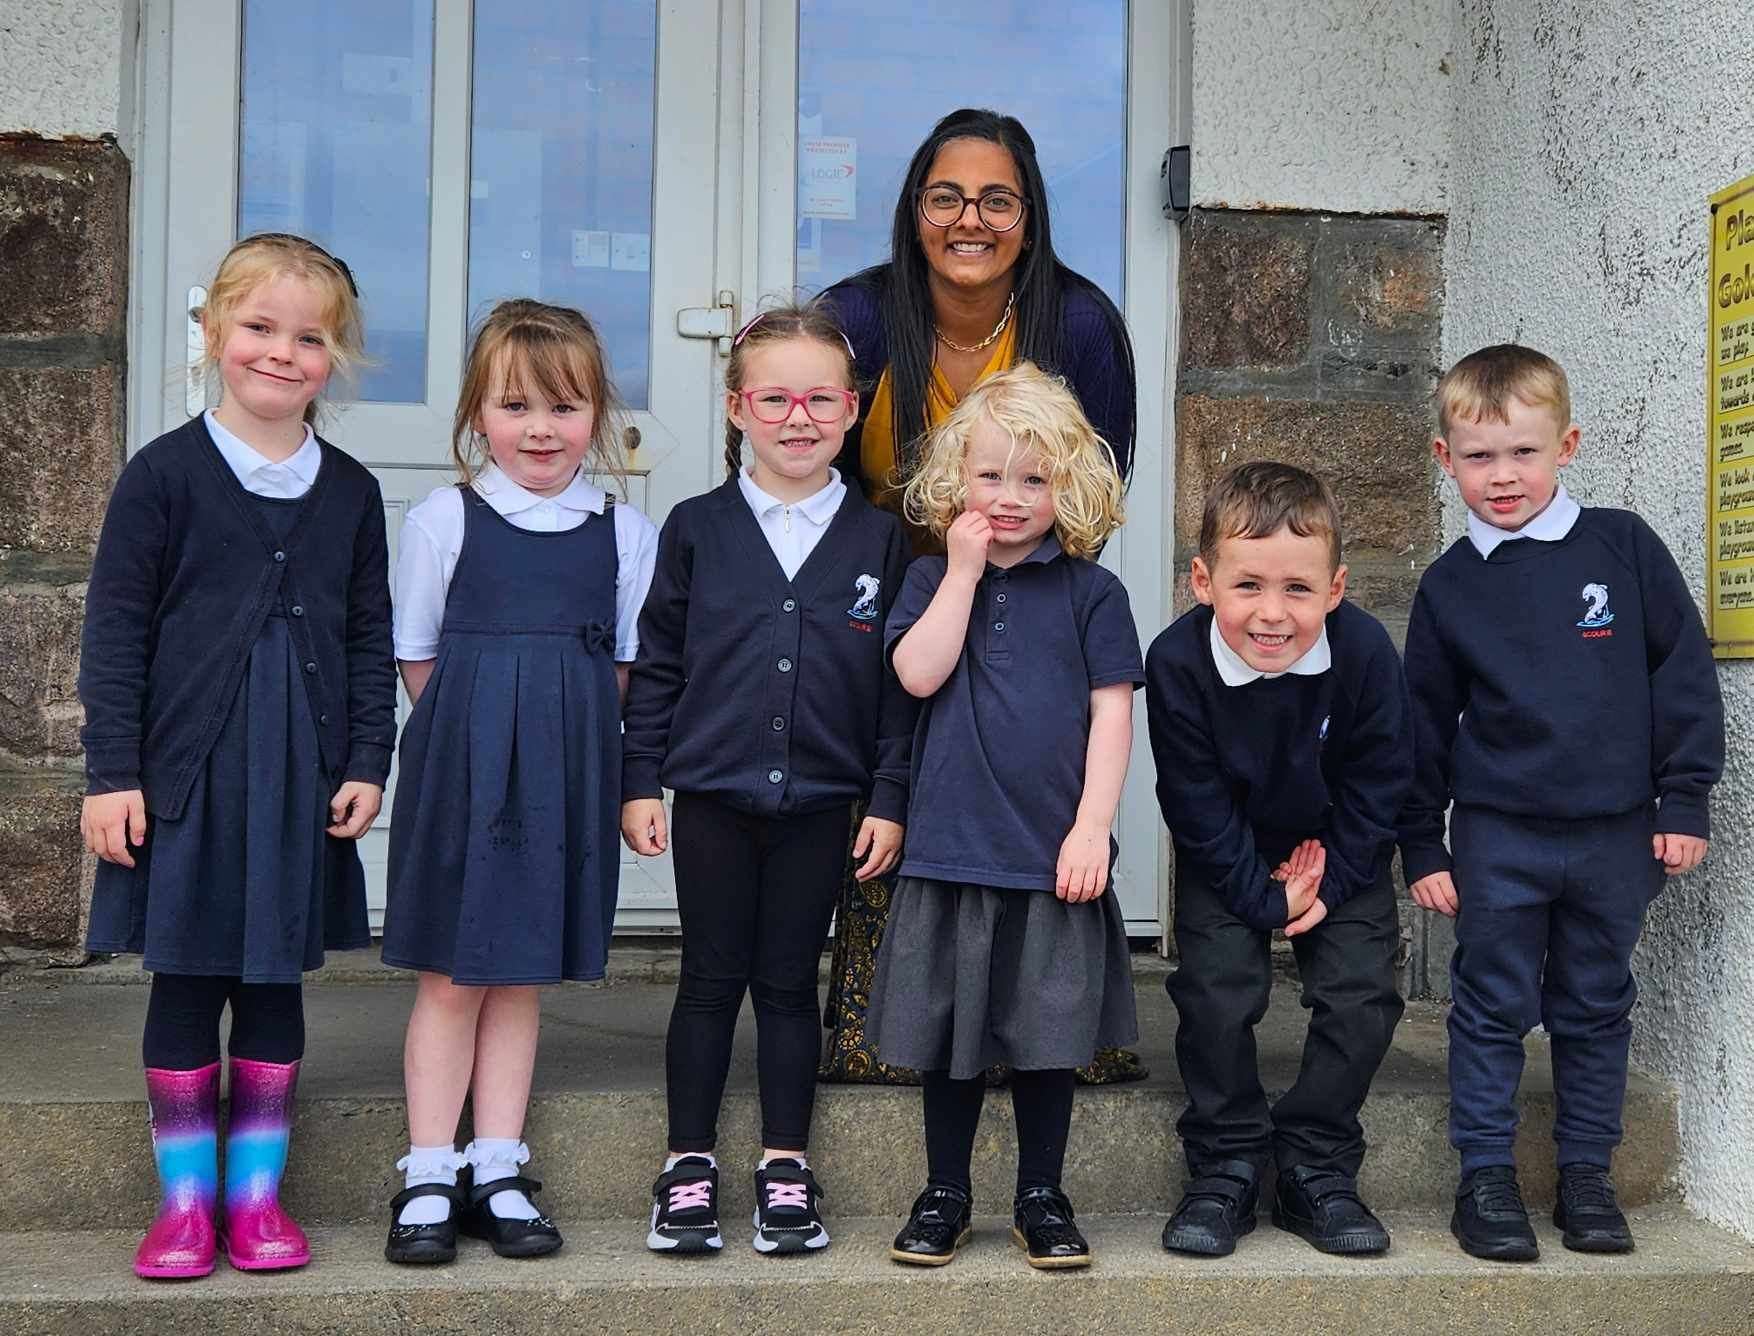 The new p1 intake at Scourie Primary School with teacher Krysha Davis. From left Iona Wilson, Chloe Chapman, Ava Macdonald, Eilidh Beveridge, Ally Macleod and Arran Flett.